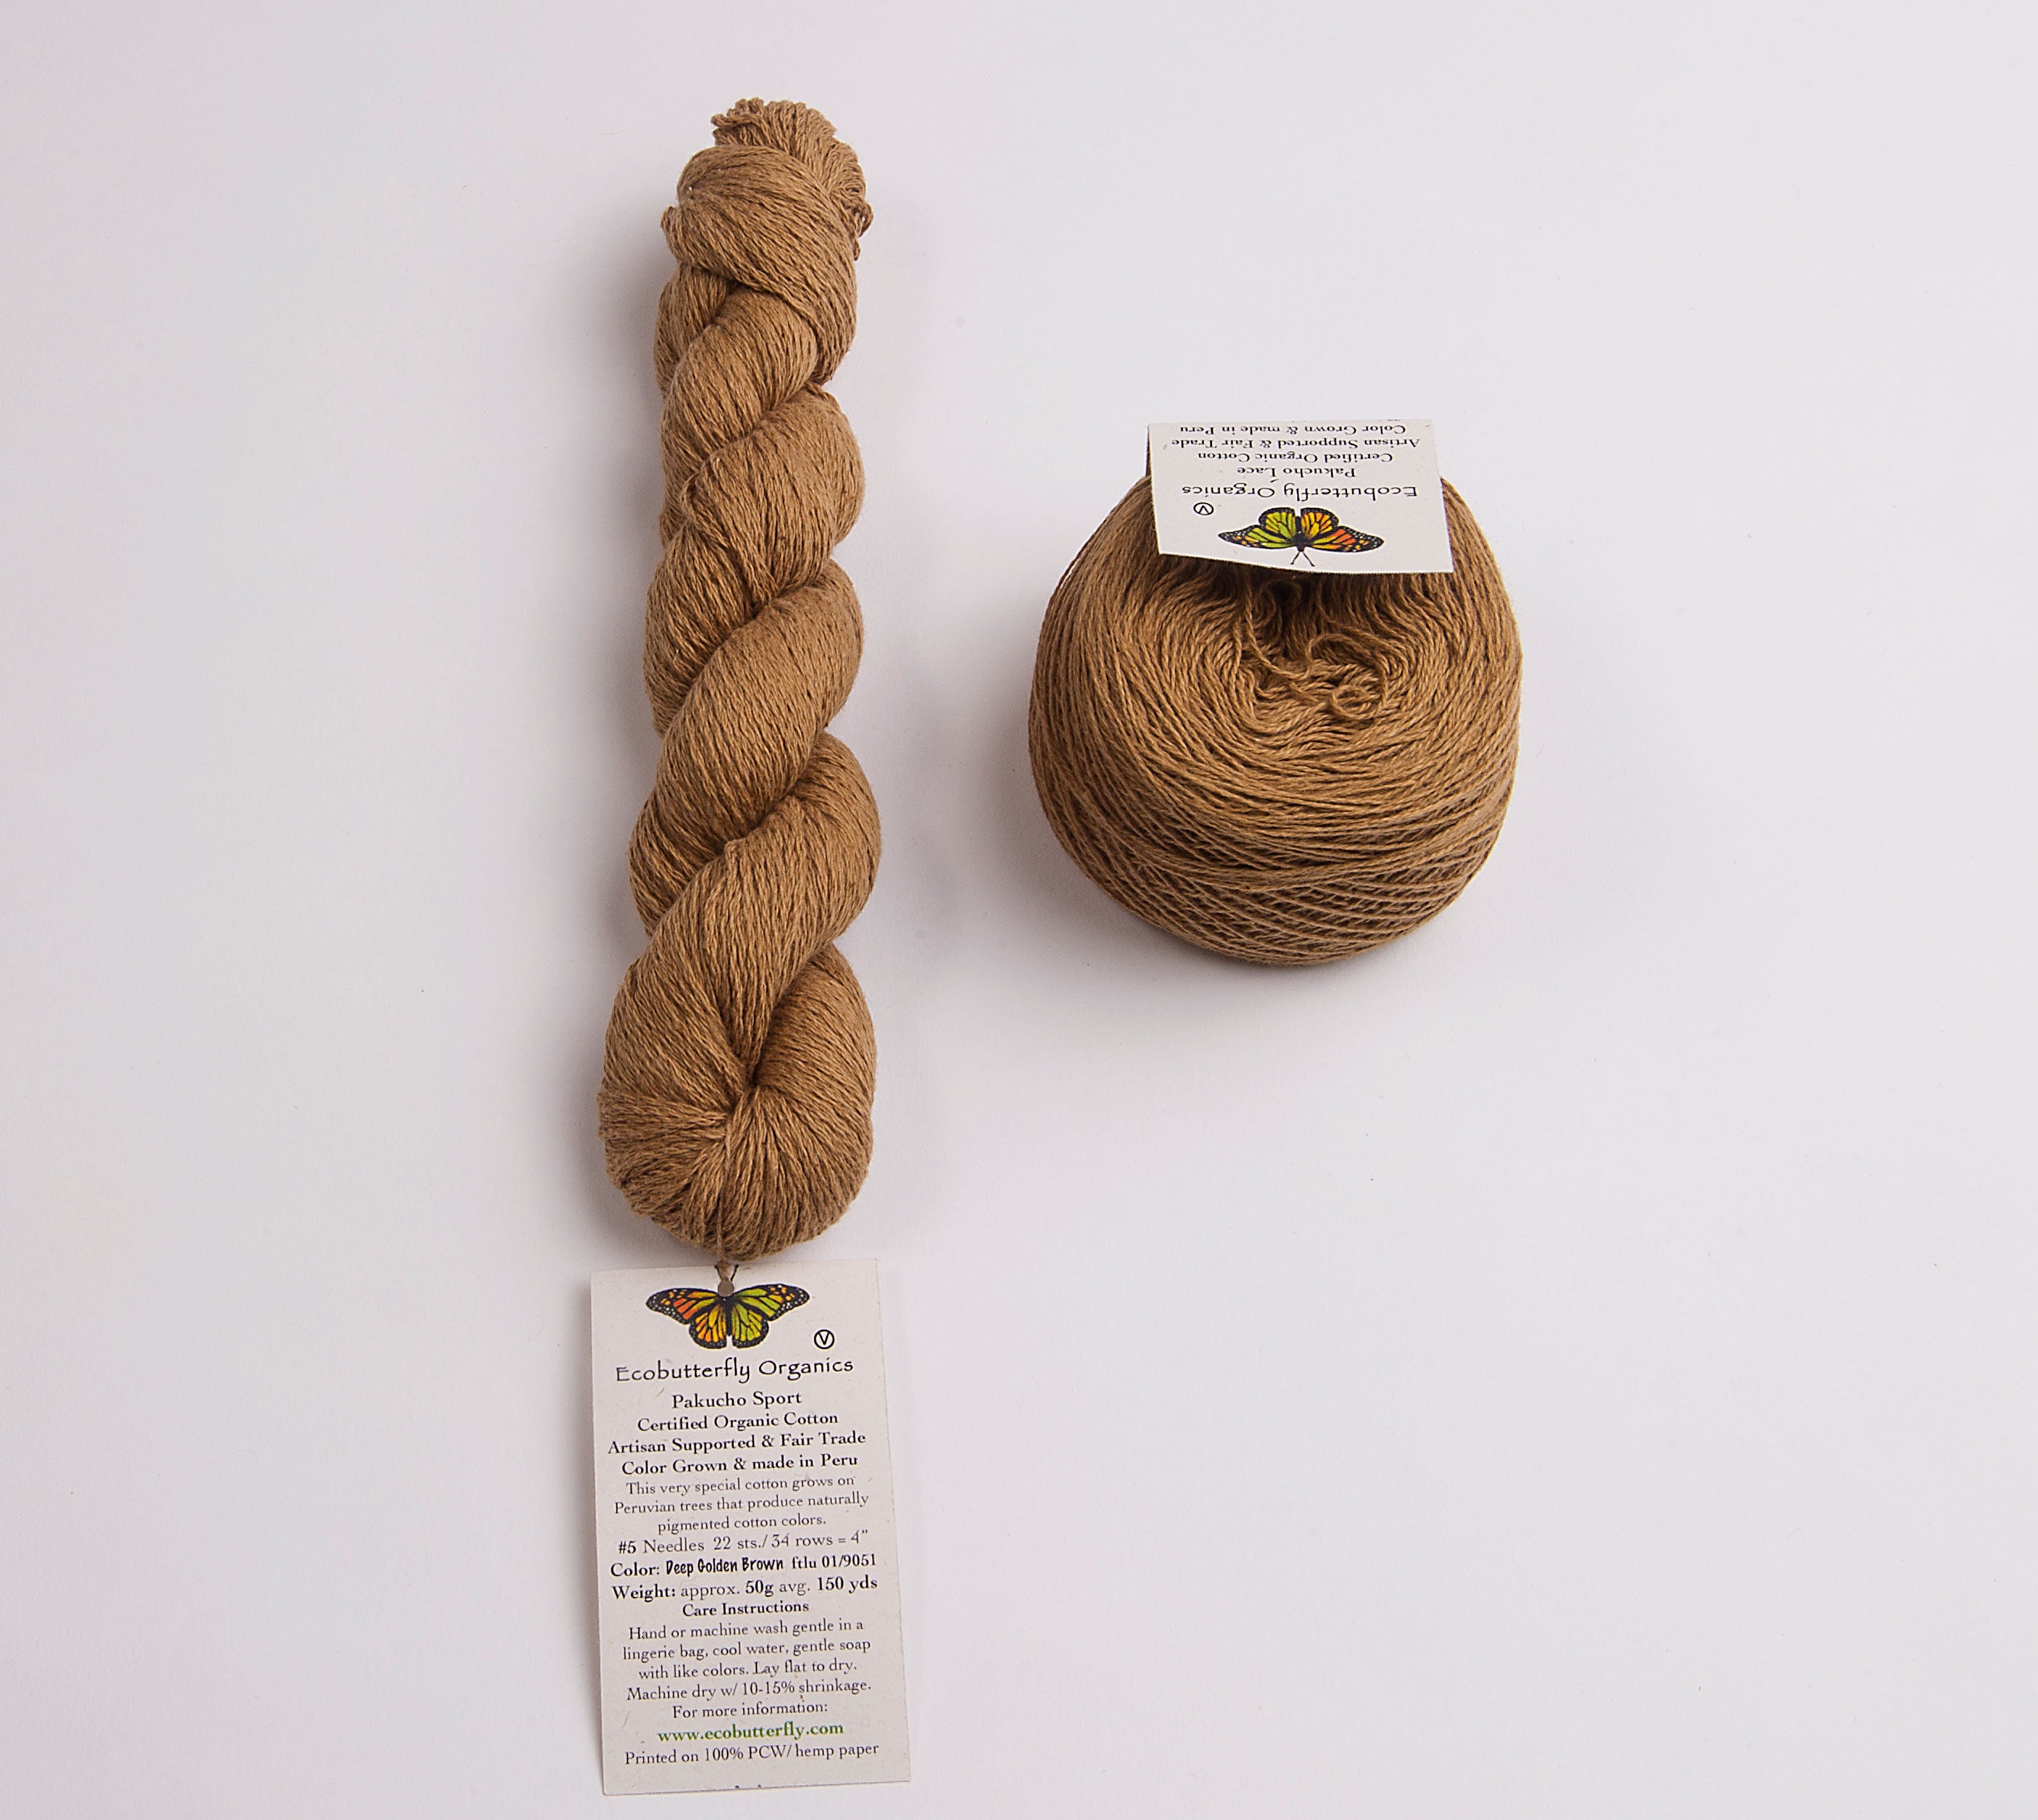 Pakucho Organic Cotton Tanguis Hand Brushed Fleece Fabric: Ecobutterfly:  Organic Cotton Yarn, Recycled Glass Beads, Hemp & More